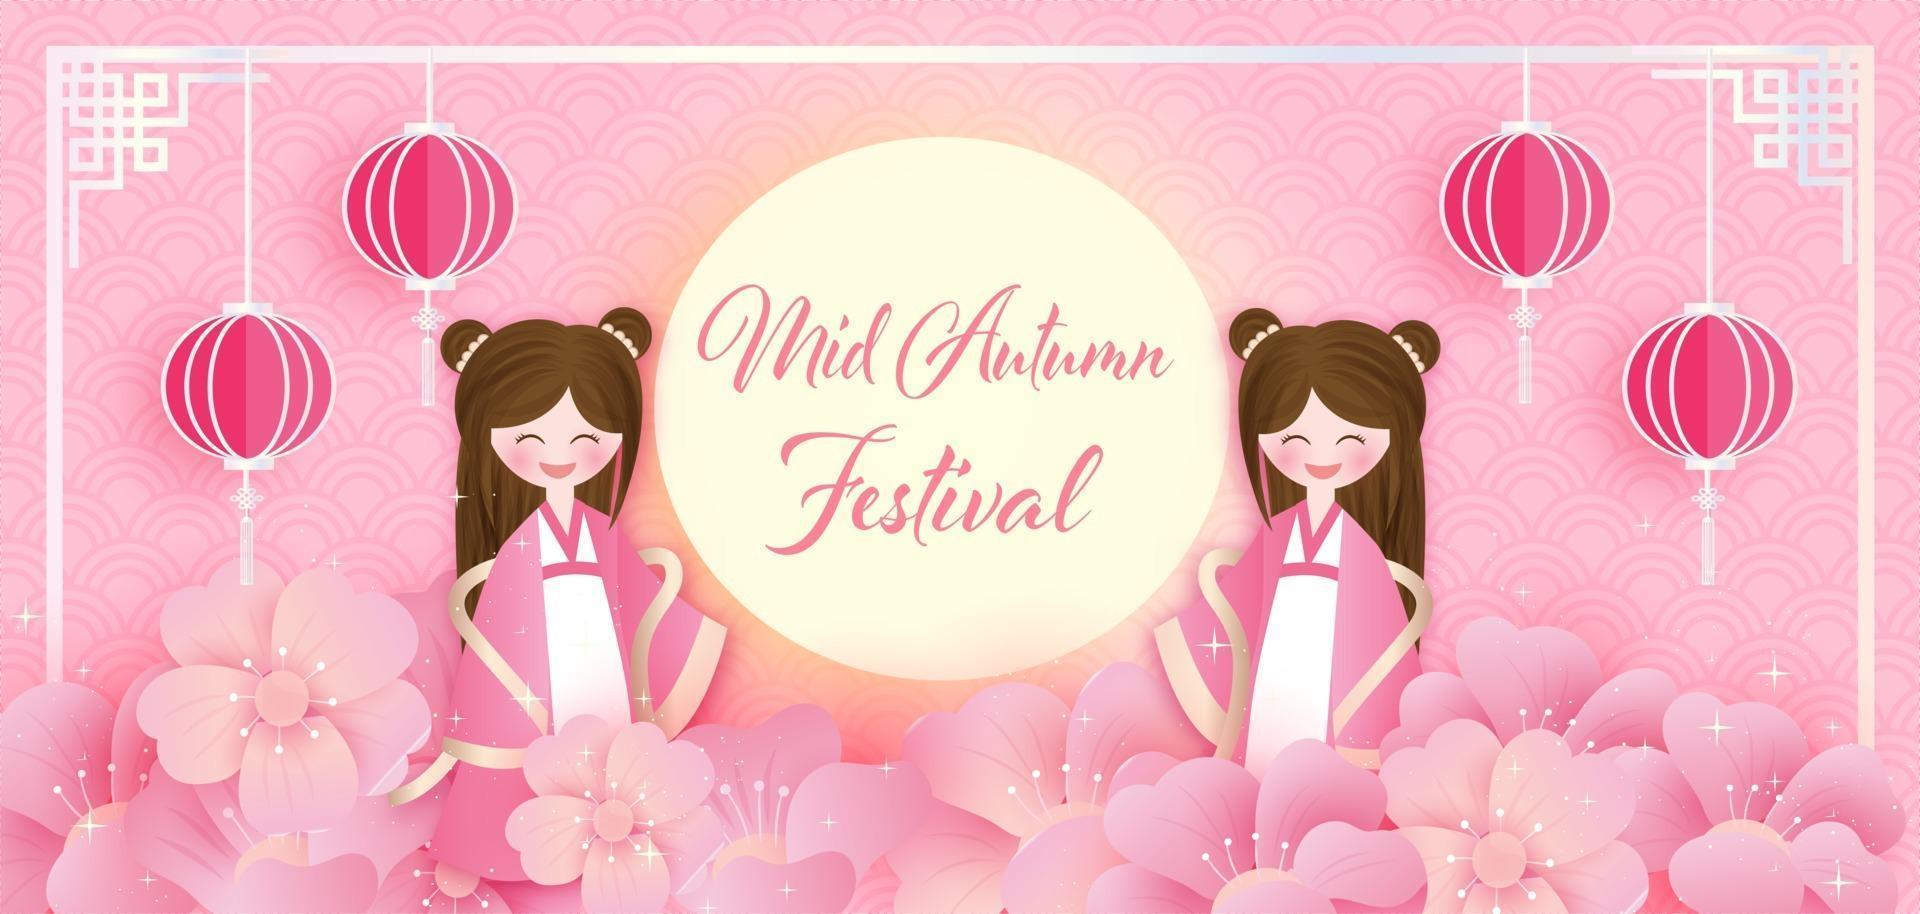 Mid autumn festival sale banner vector